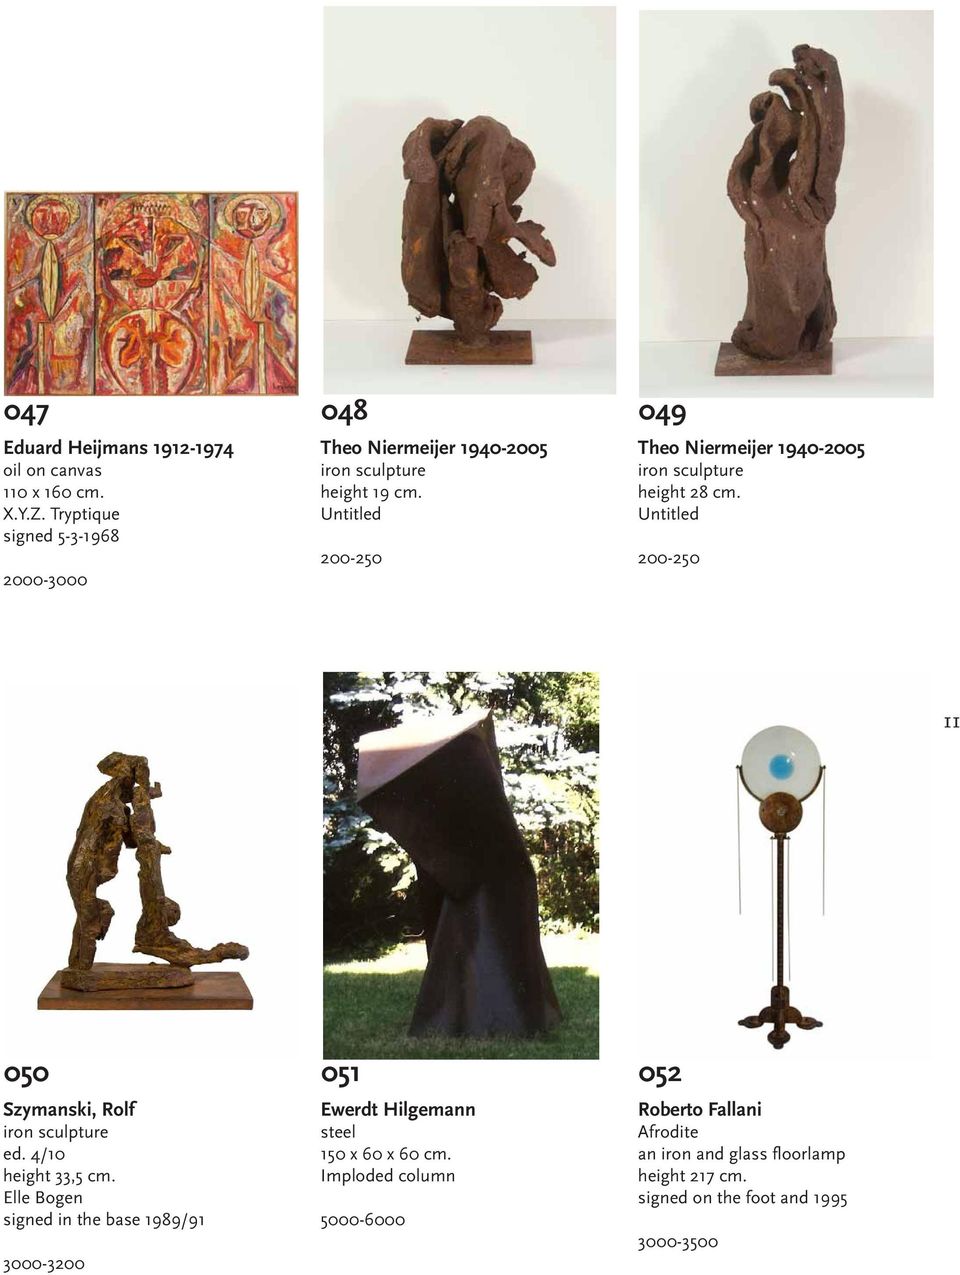 200-250 049 Theo Niermeijer 1940-2005 iron sculpture height 28 cm. 200-250 11 050 Szymanski, Rolf iron sculpture ed.